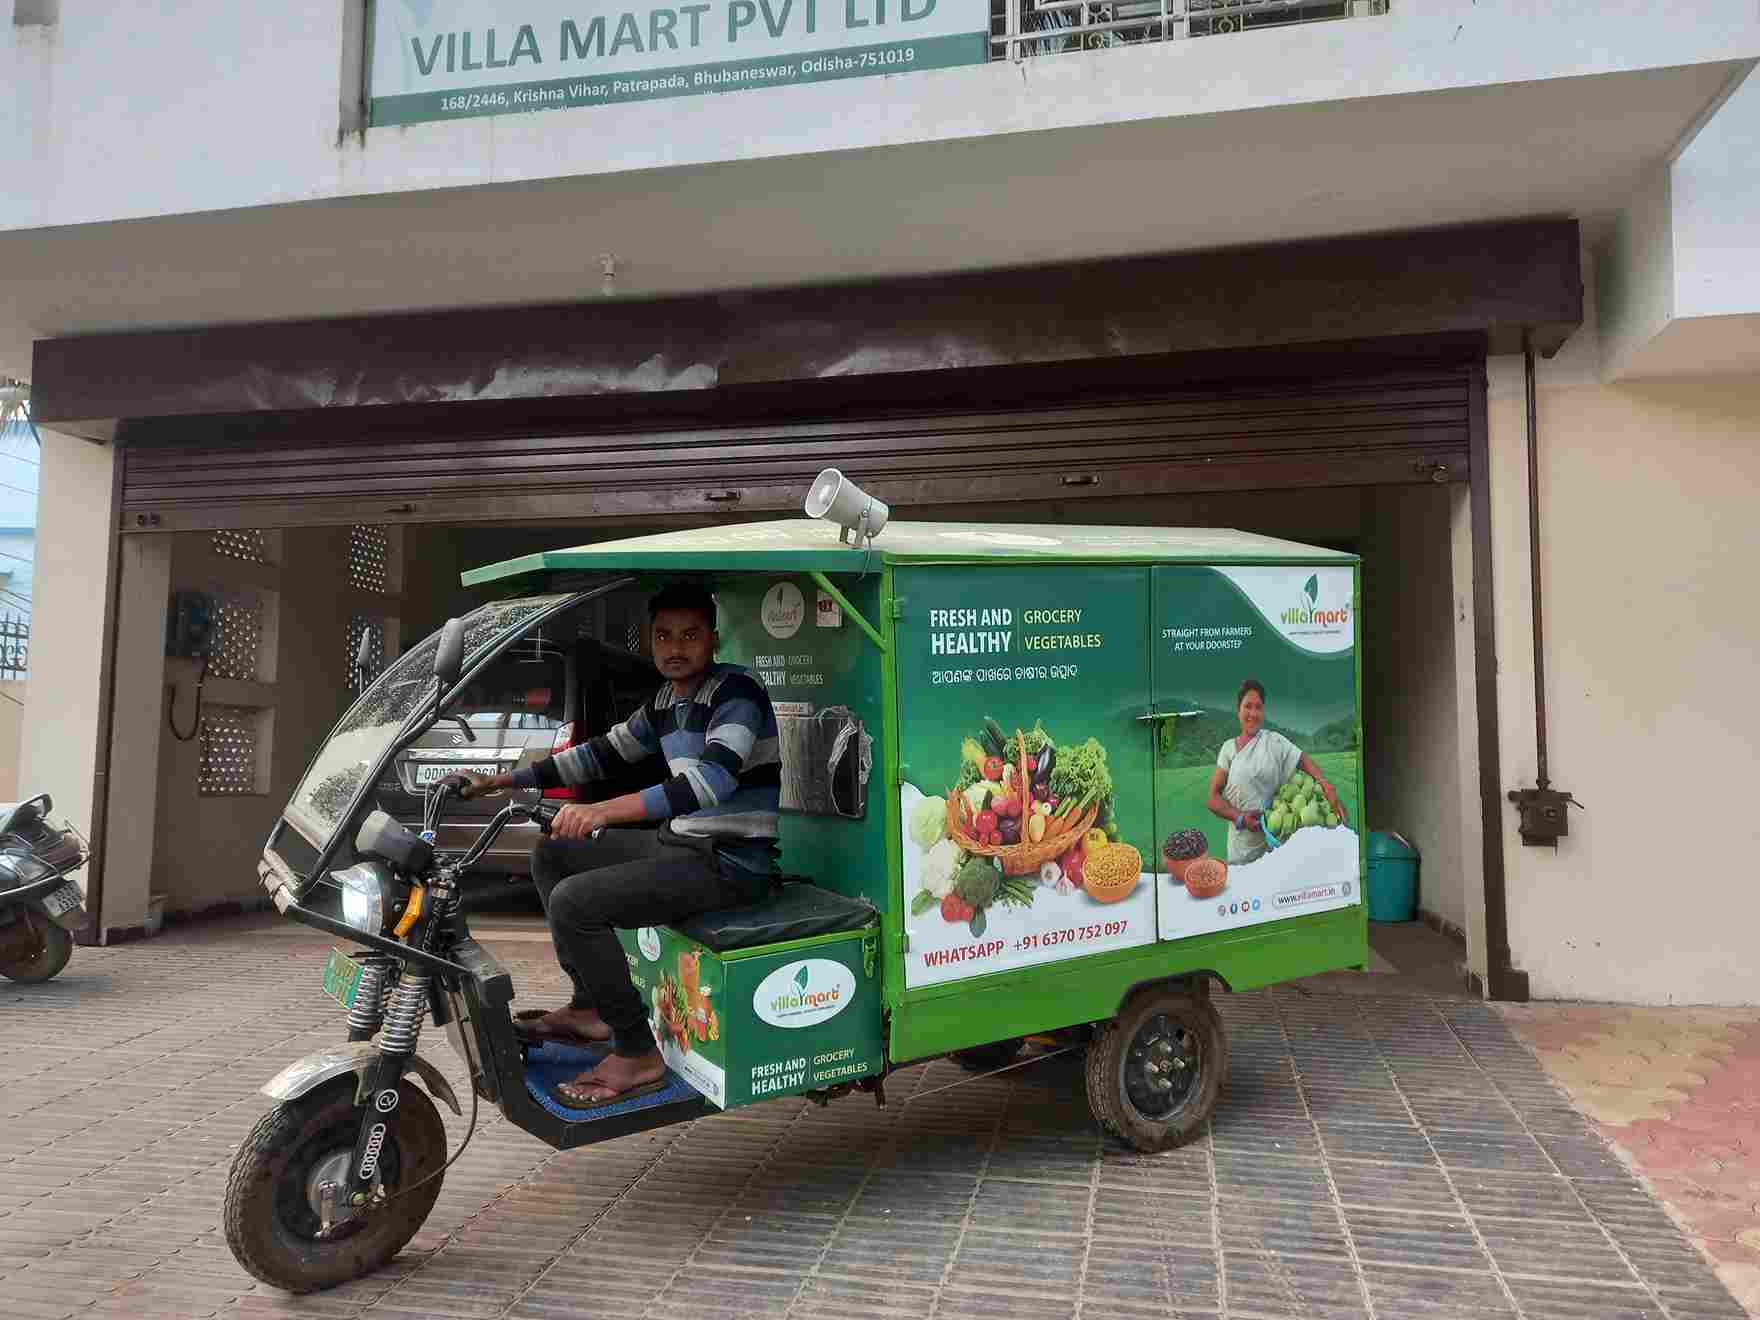 Villa Mart has seven mobile vans that are converted into mini supermarkets